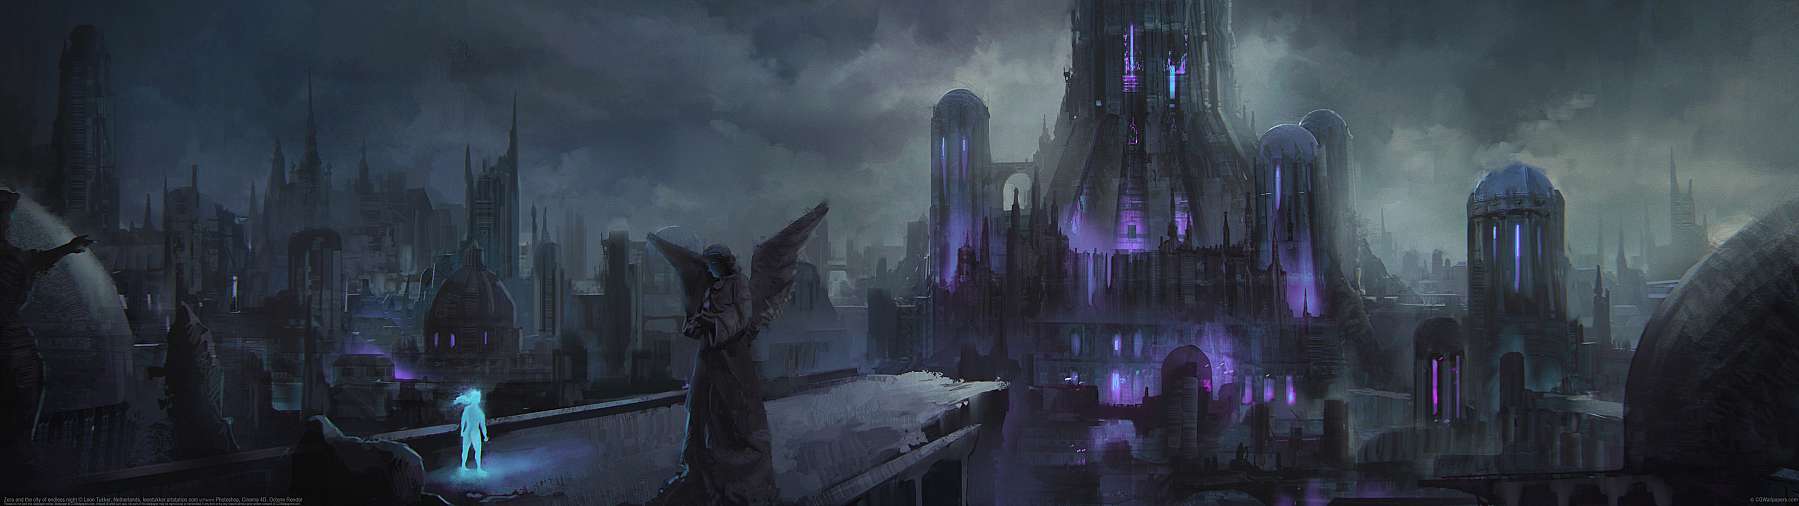 Zera and the city of endless night ultrawide wallpaper